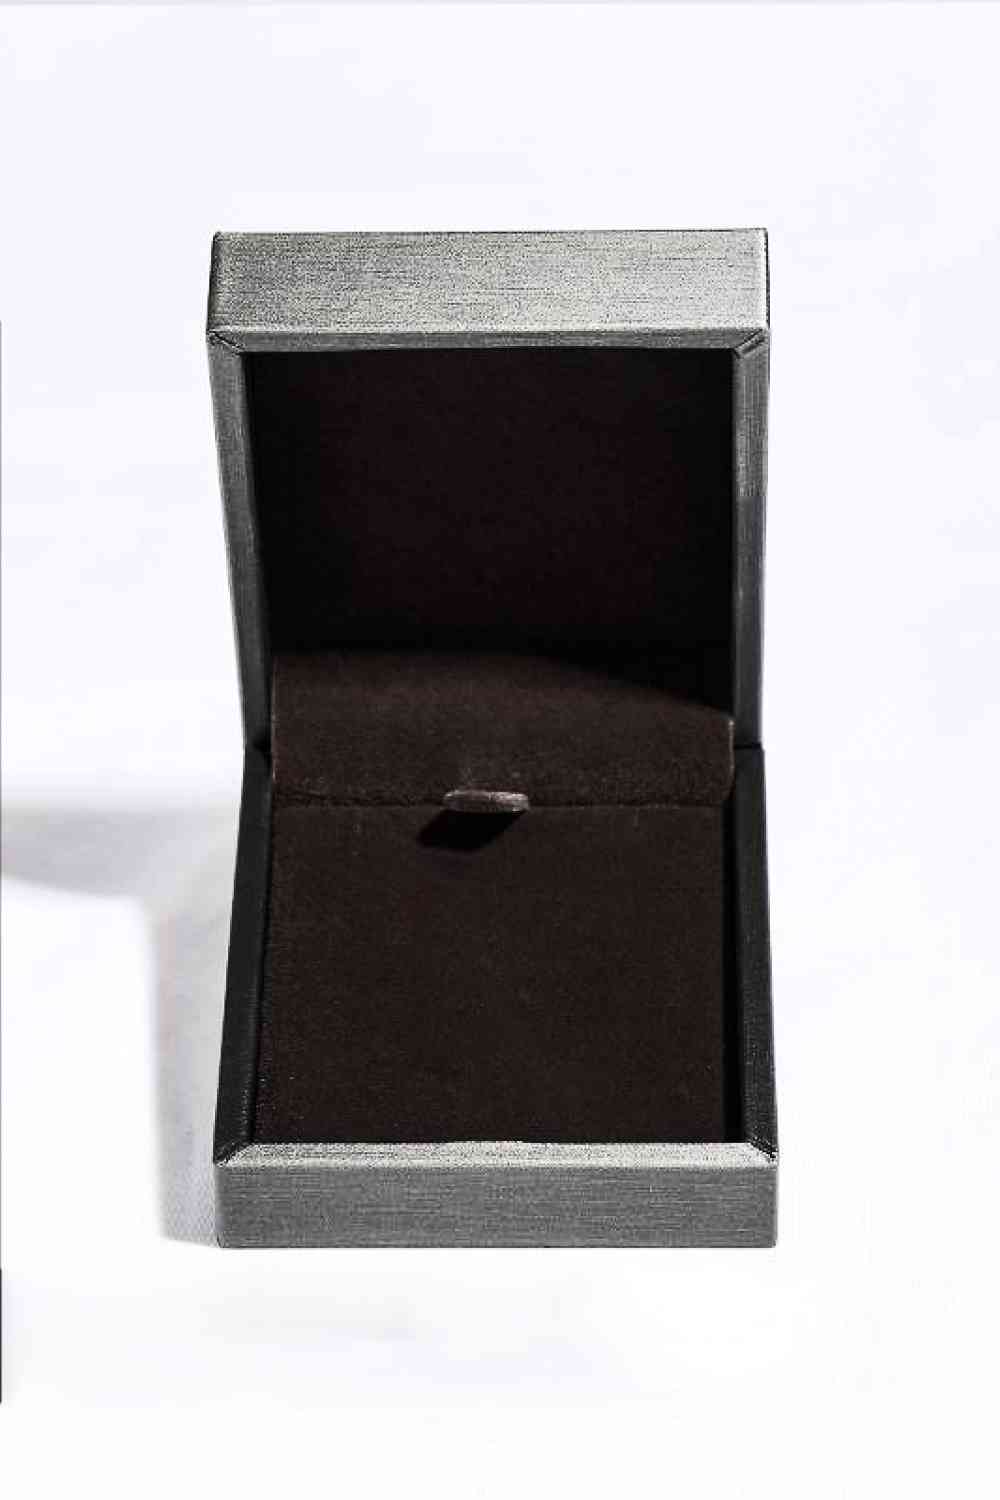 1 Karat Moissanit 925 Sterling Silber Kettenglieder-Halskette